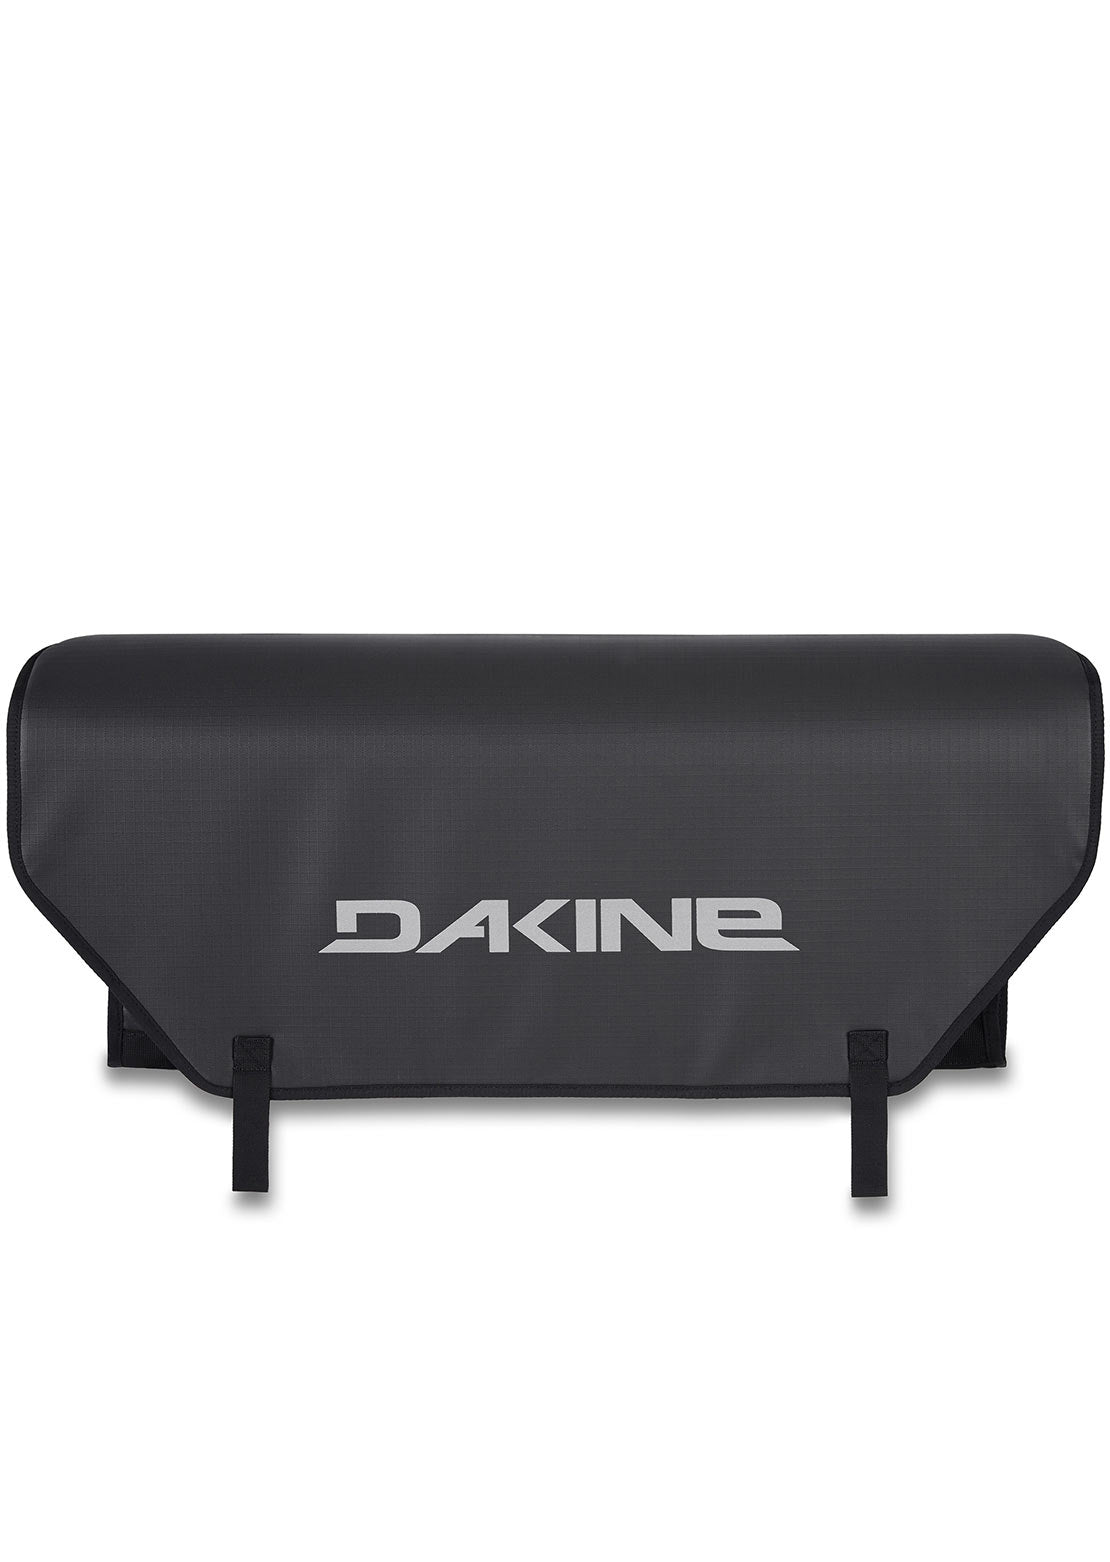 Dakine Pickup Pad Halfside Tailgate Black